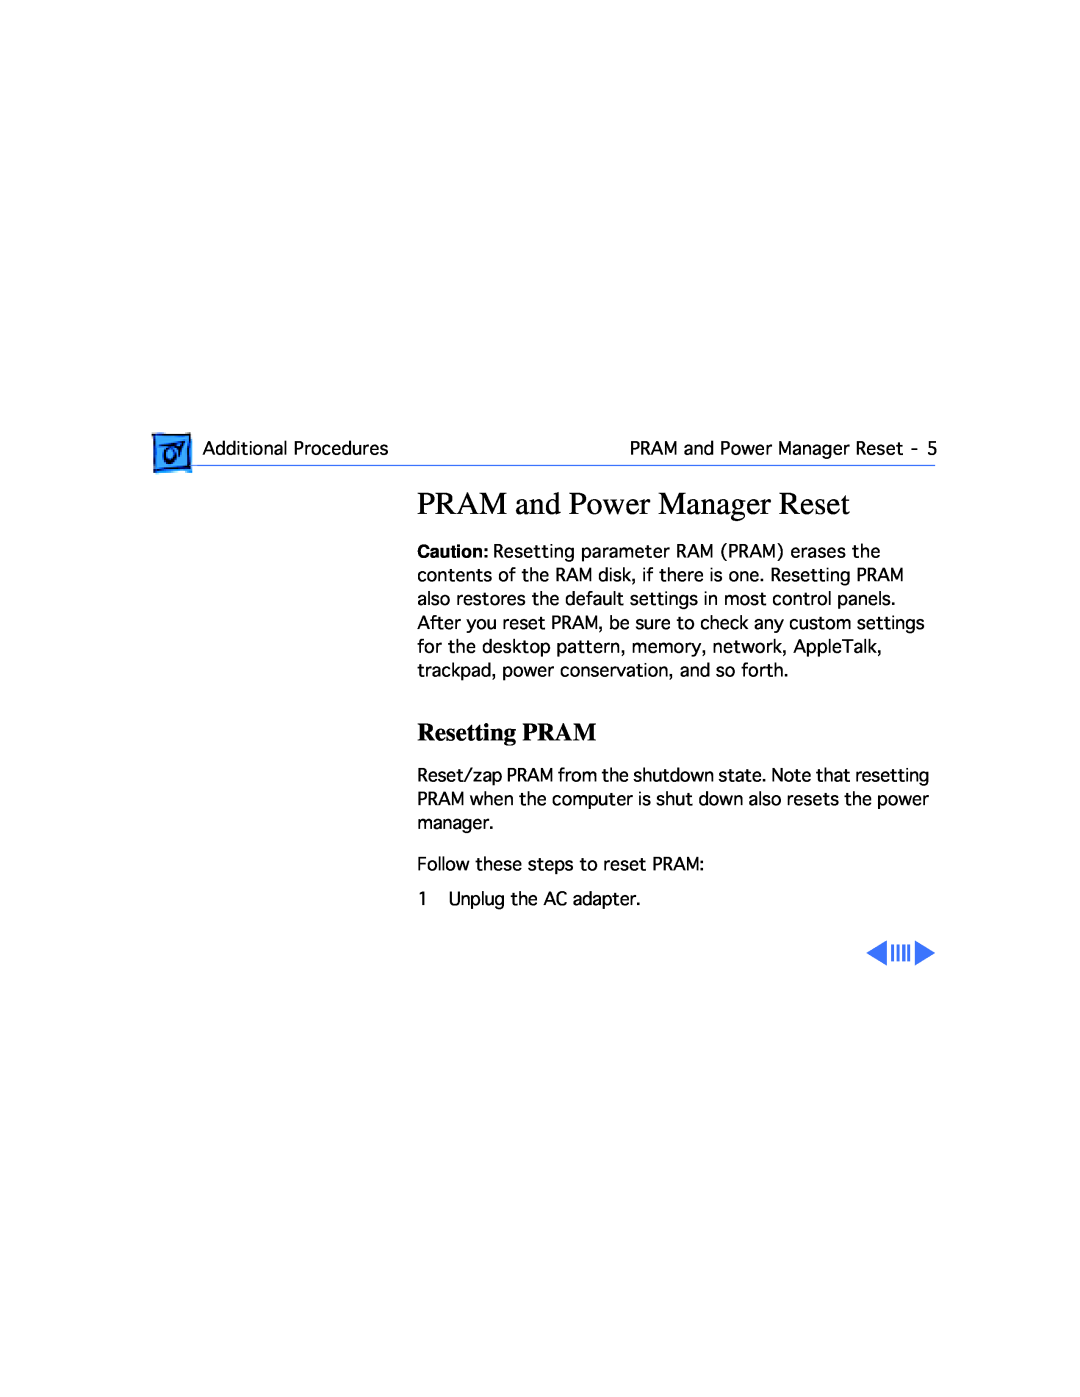 Apple G3, 3400C/200 manual PRAM and Power Manager Reset, Resetting PRAM 